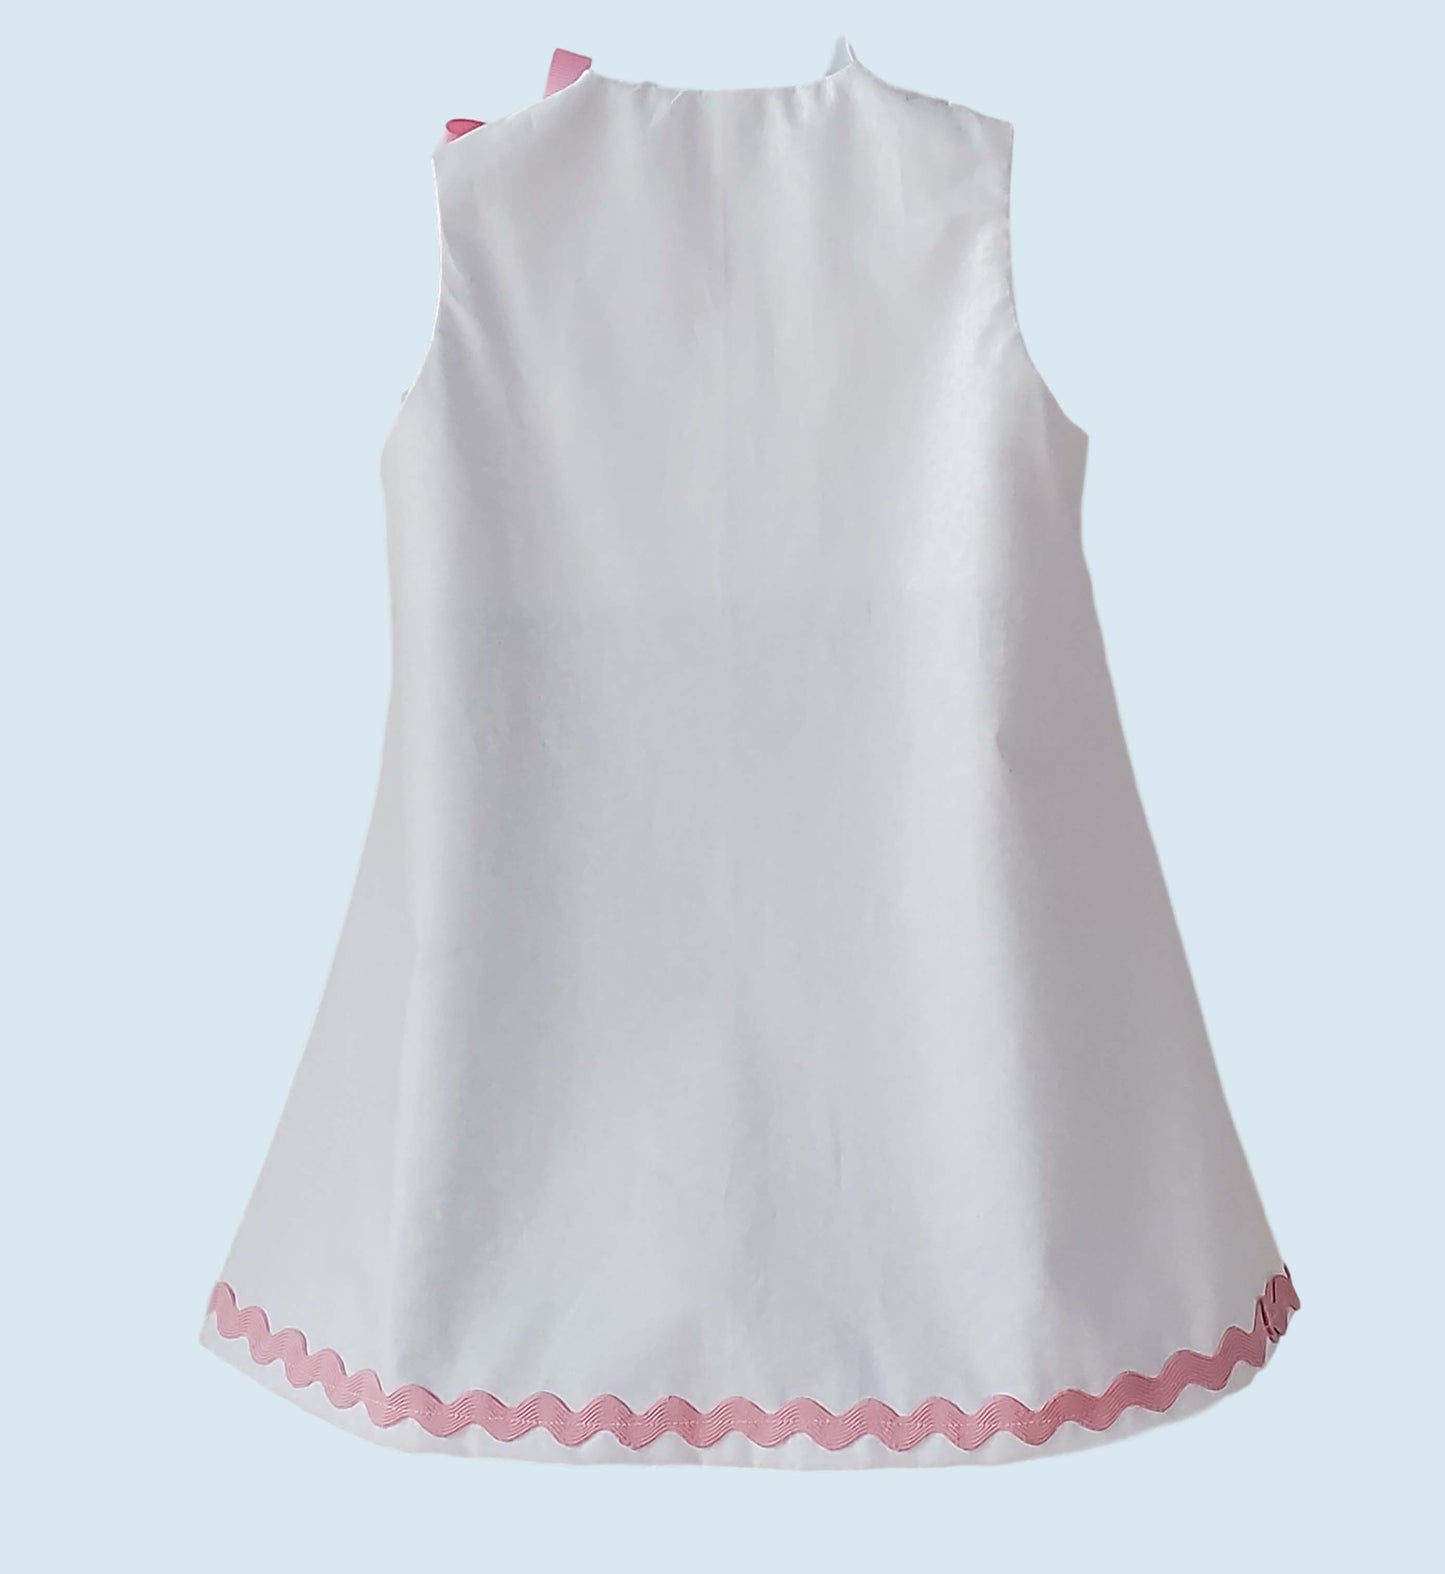 Monogram Girls Dress | Birthday Dress | Girls Dress |  Personalized Baby Dress |  Personalized Jumper Girls Dress